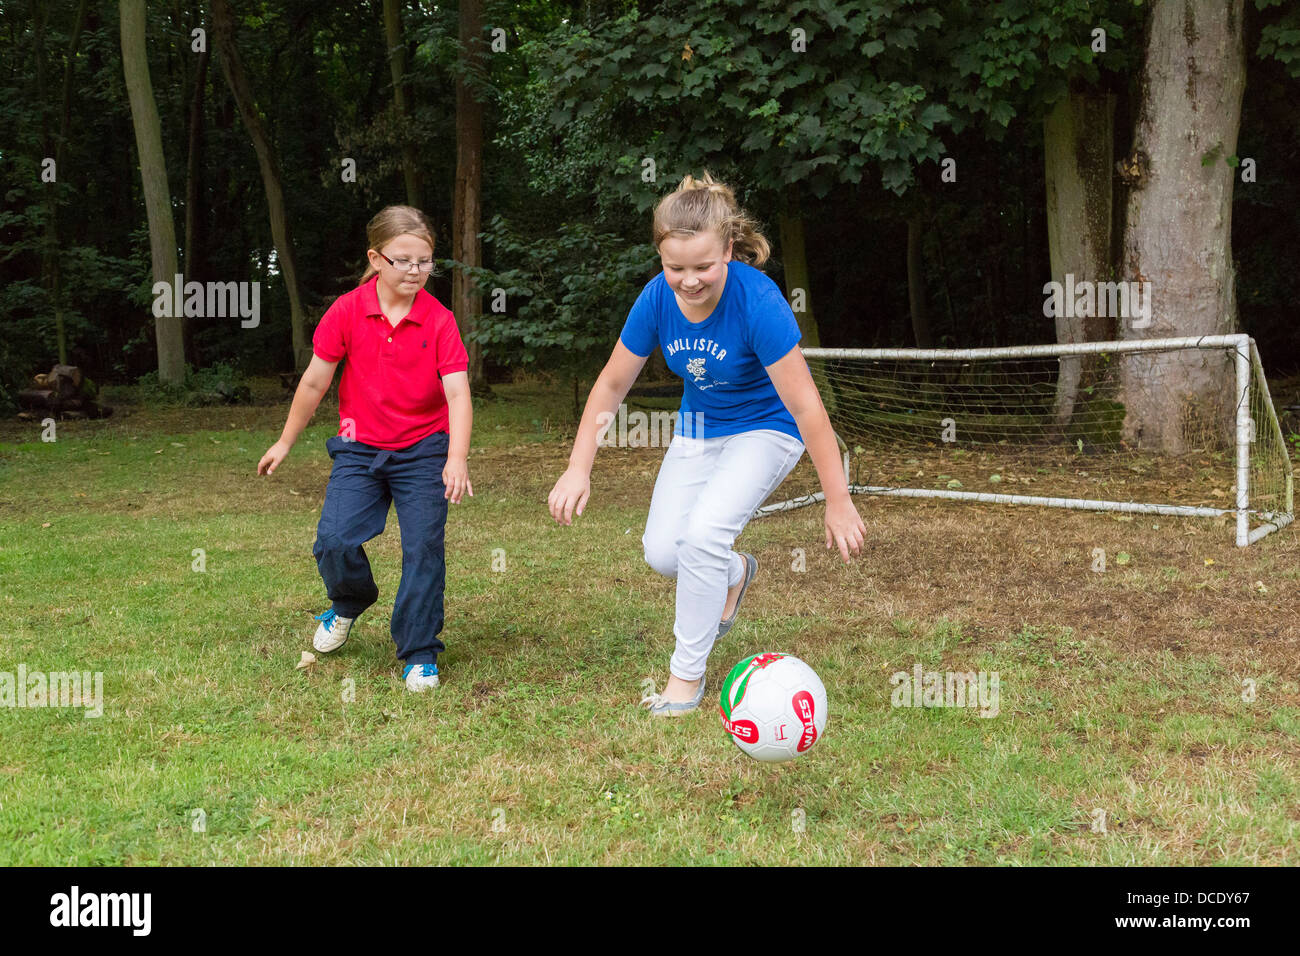 two young girls playing soccer in backyard/garden Stock Photo